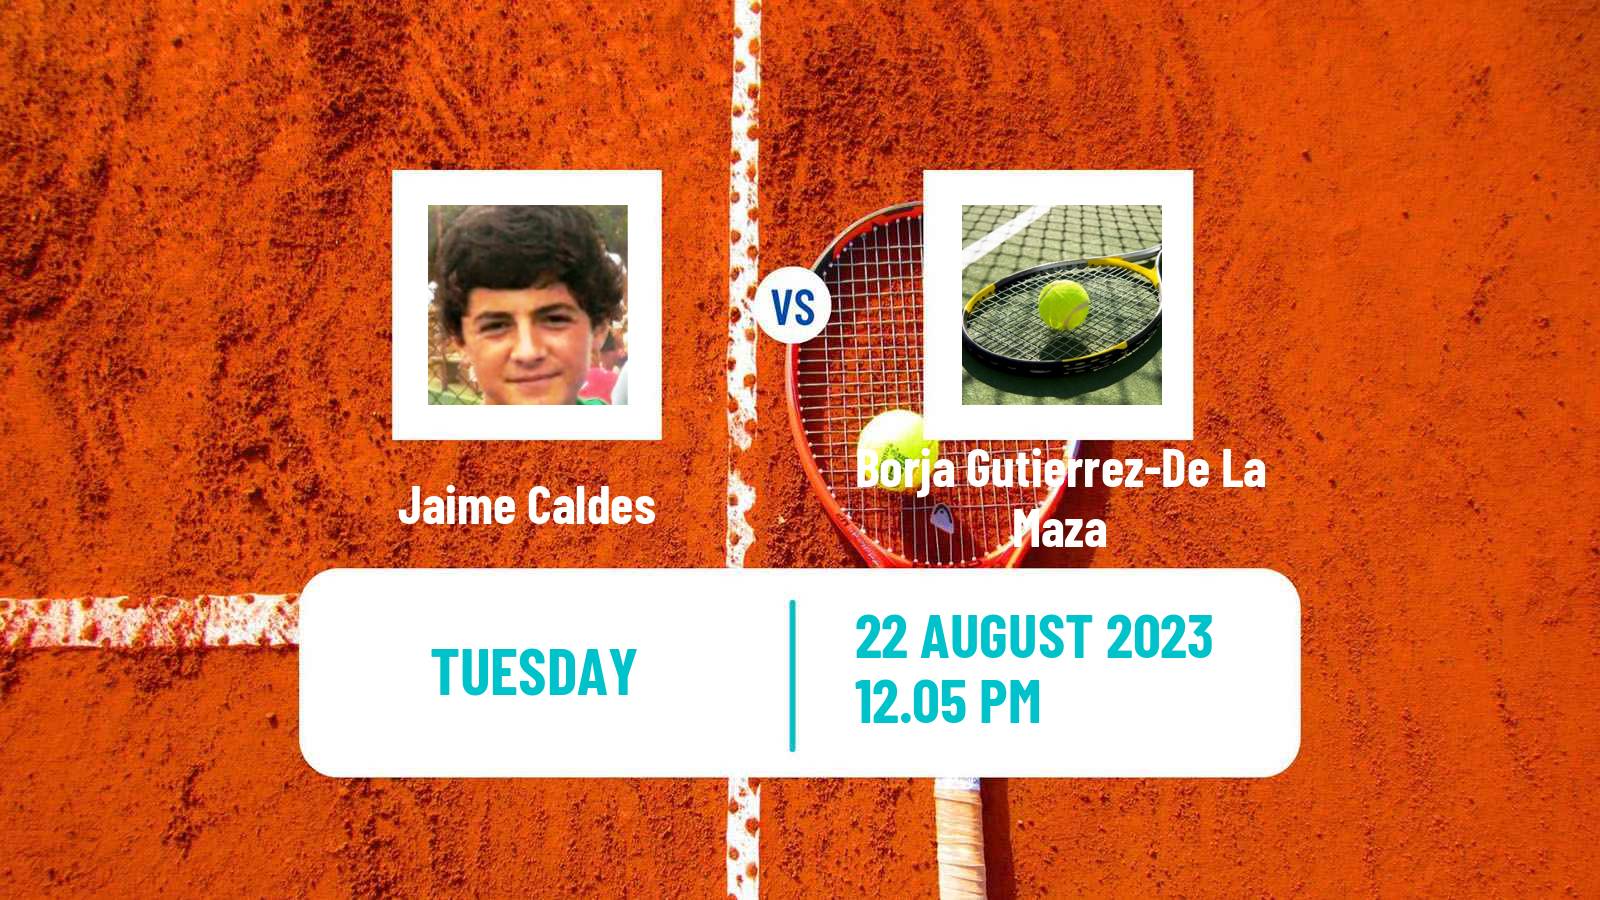 Tennis ITF M25 Santander Men Jaime Caldes - Borja Gutierrez-De La Maza